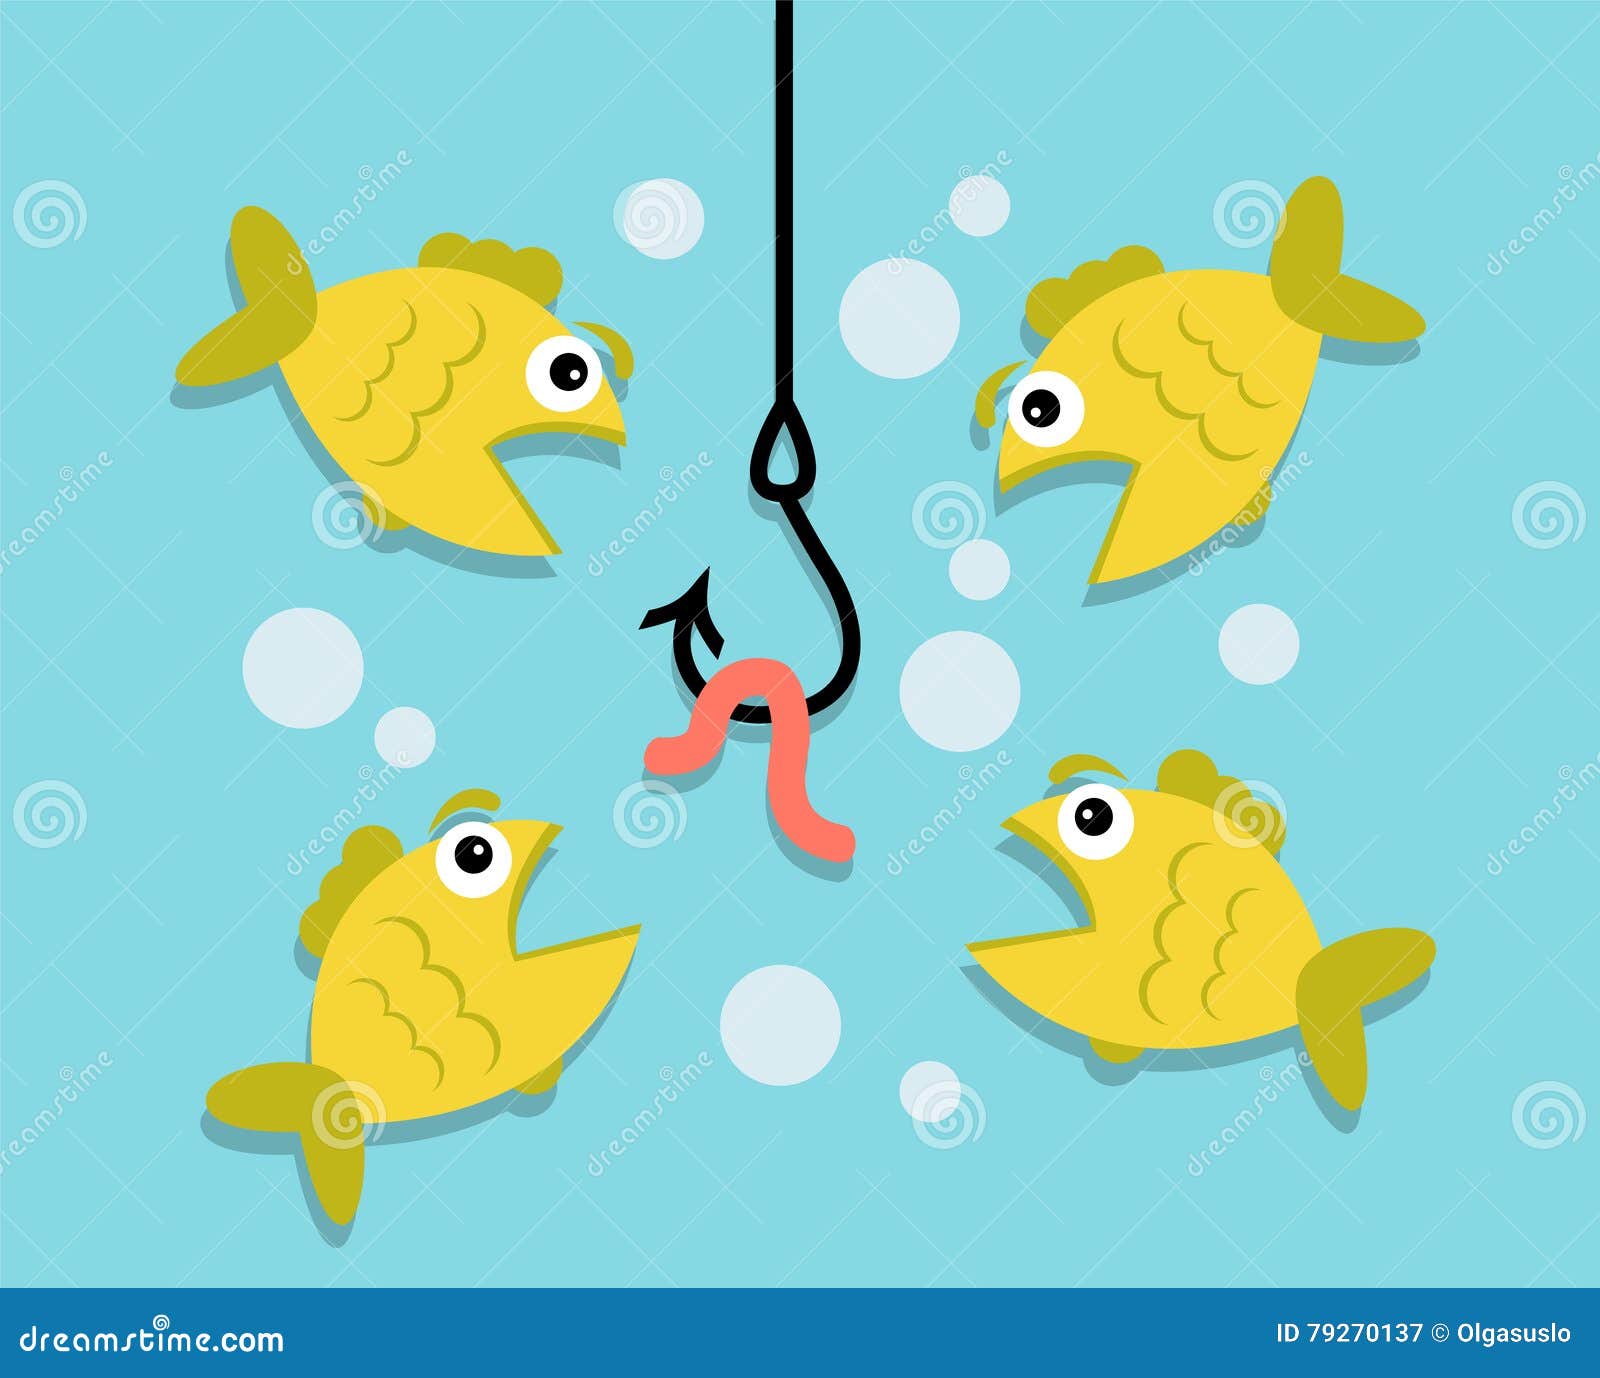 Four Fish On A Yellow Background Cartoon Vector | CartoonDealer.com ...